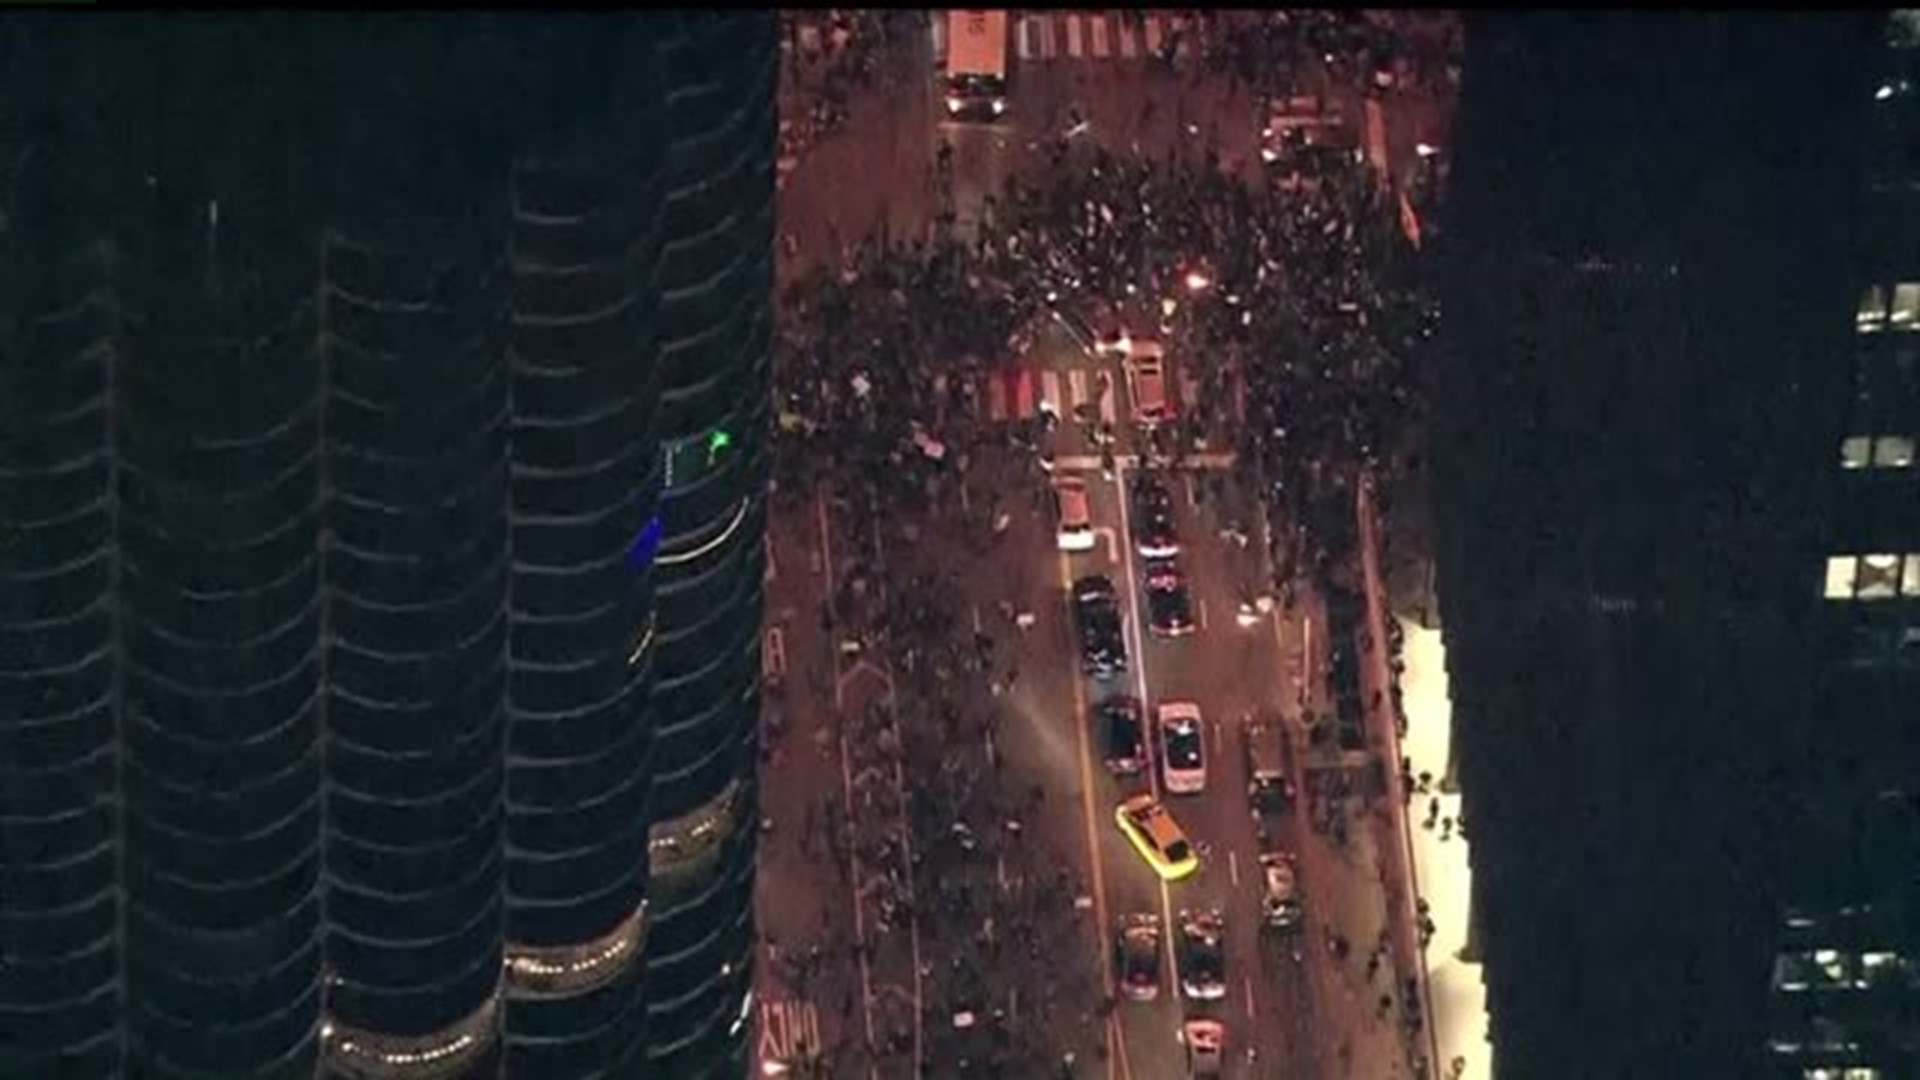 Chicago protesters gather in anti-Trump spirit